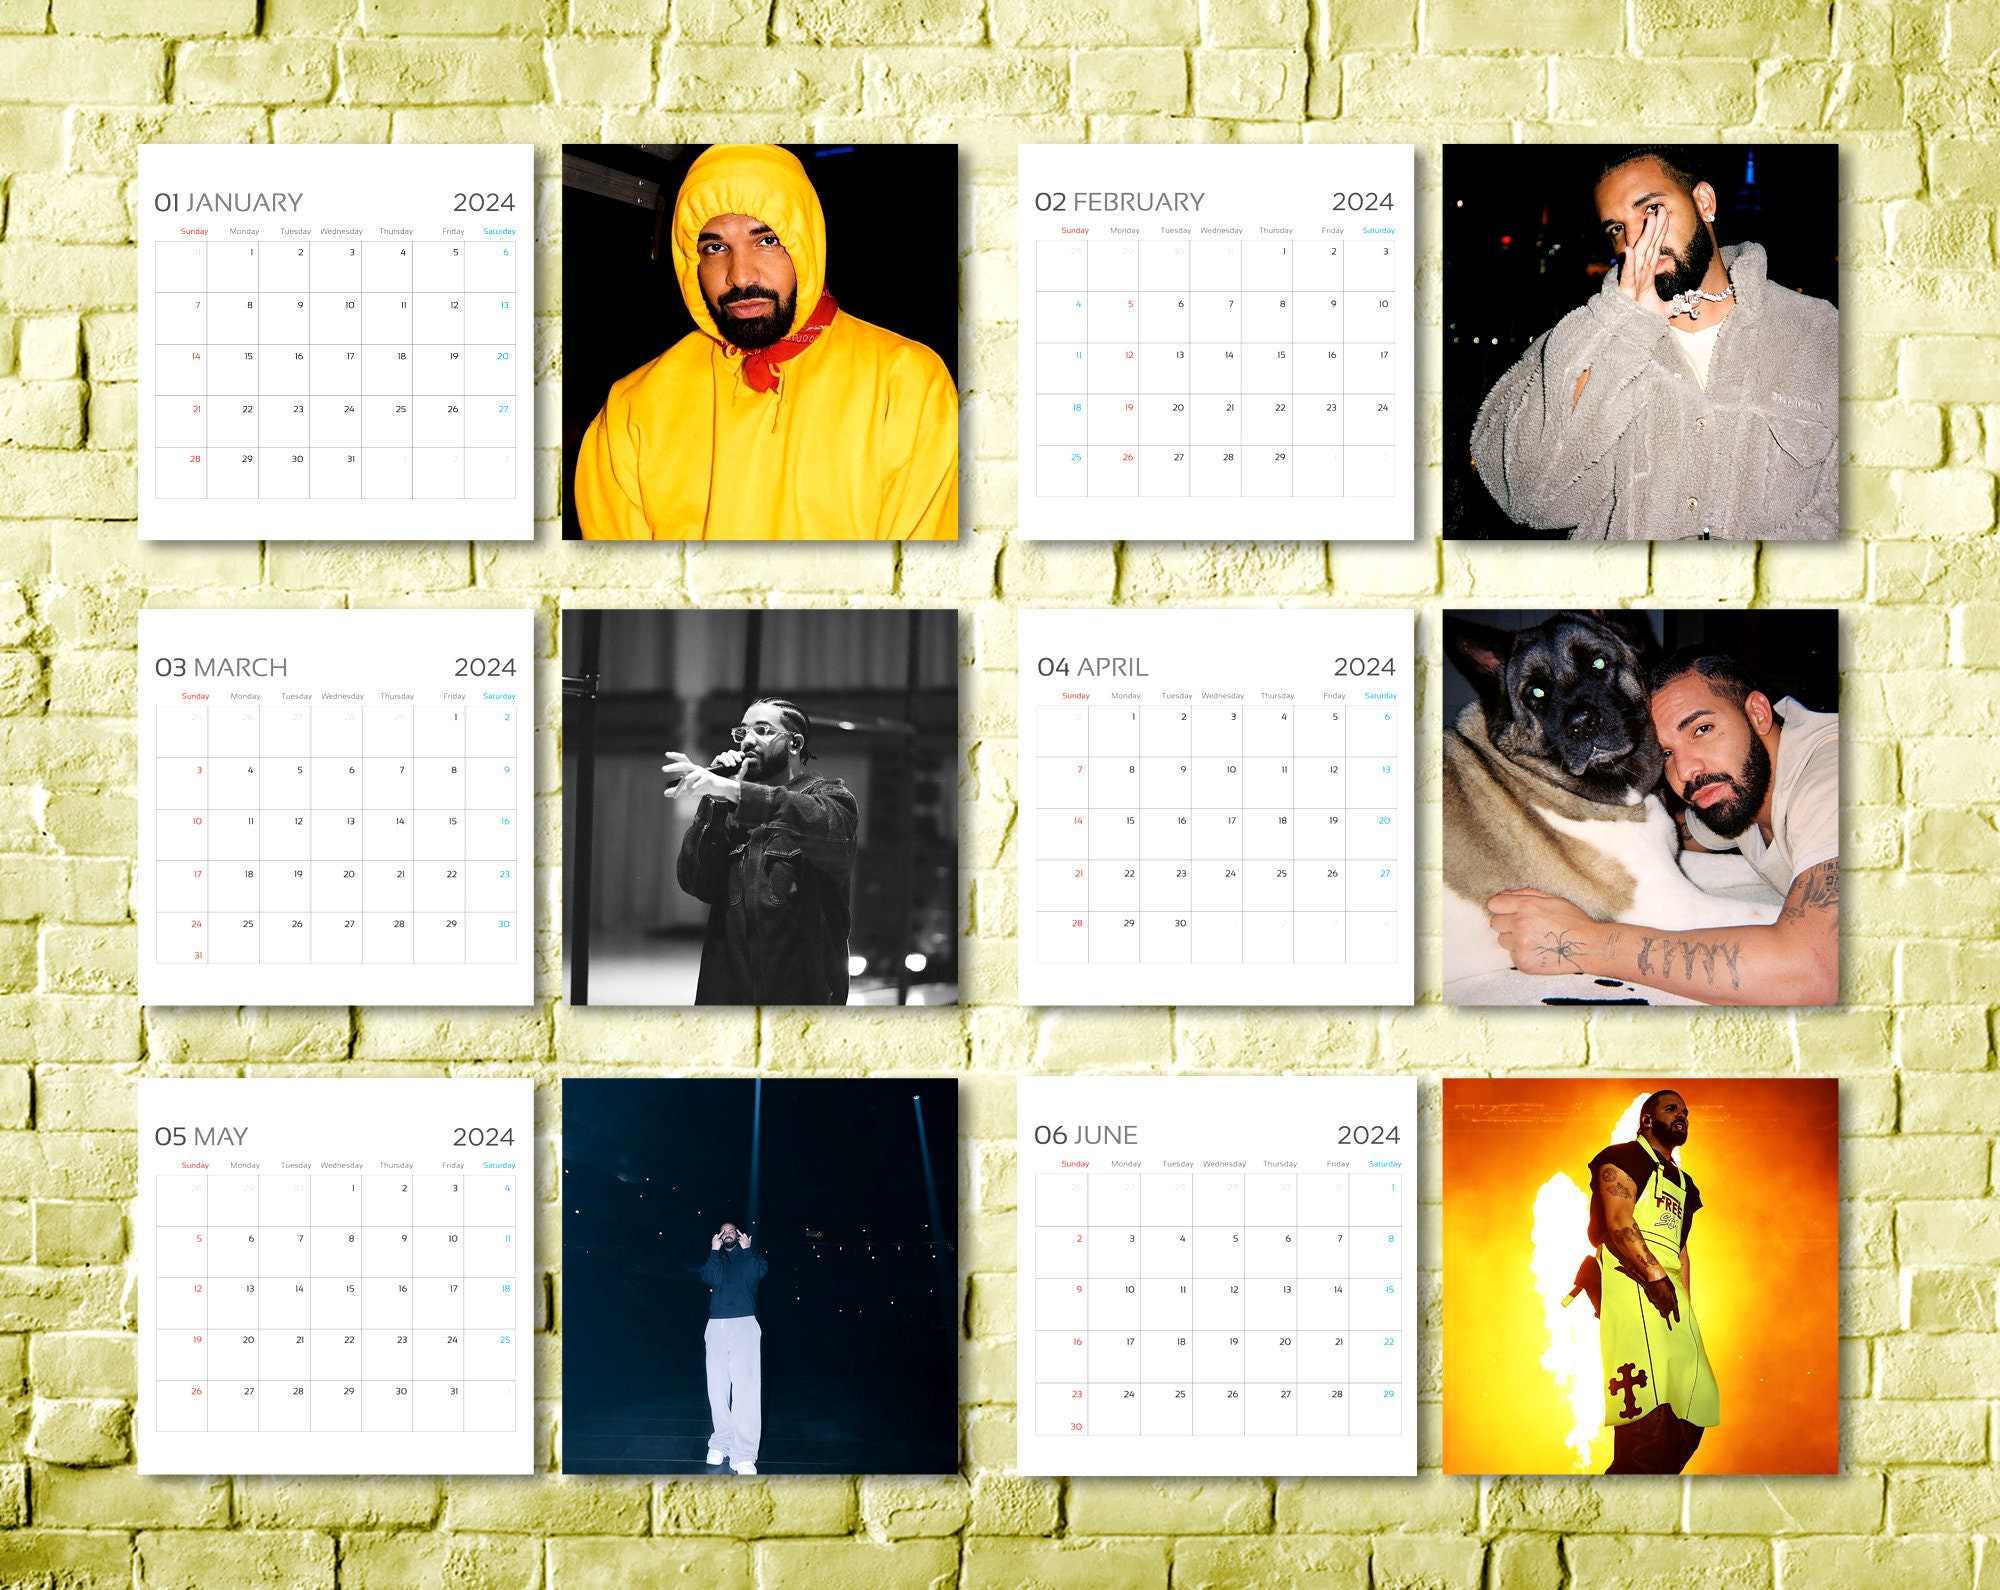 Drake Calendar 2024 Celebrity Calendar 2024 2024 Wall Calendar sold by